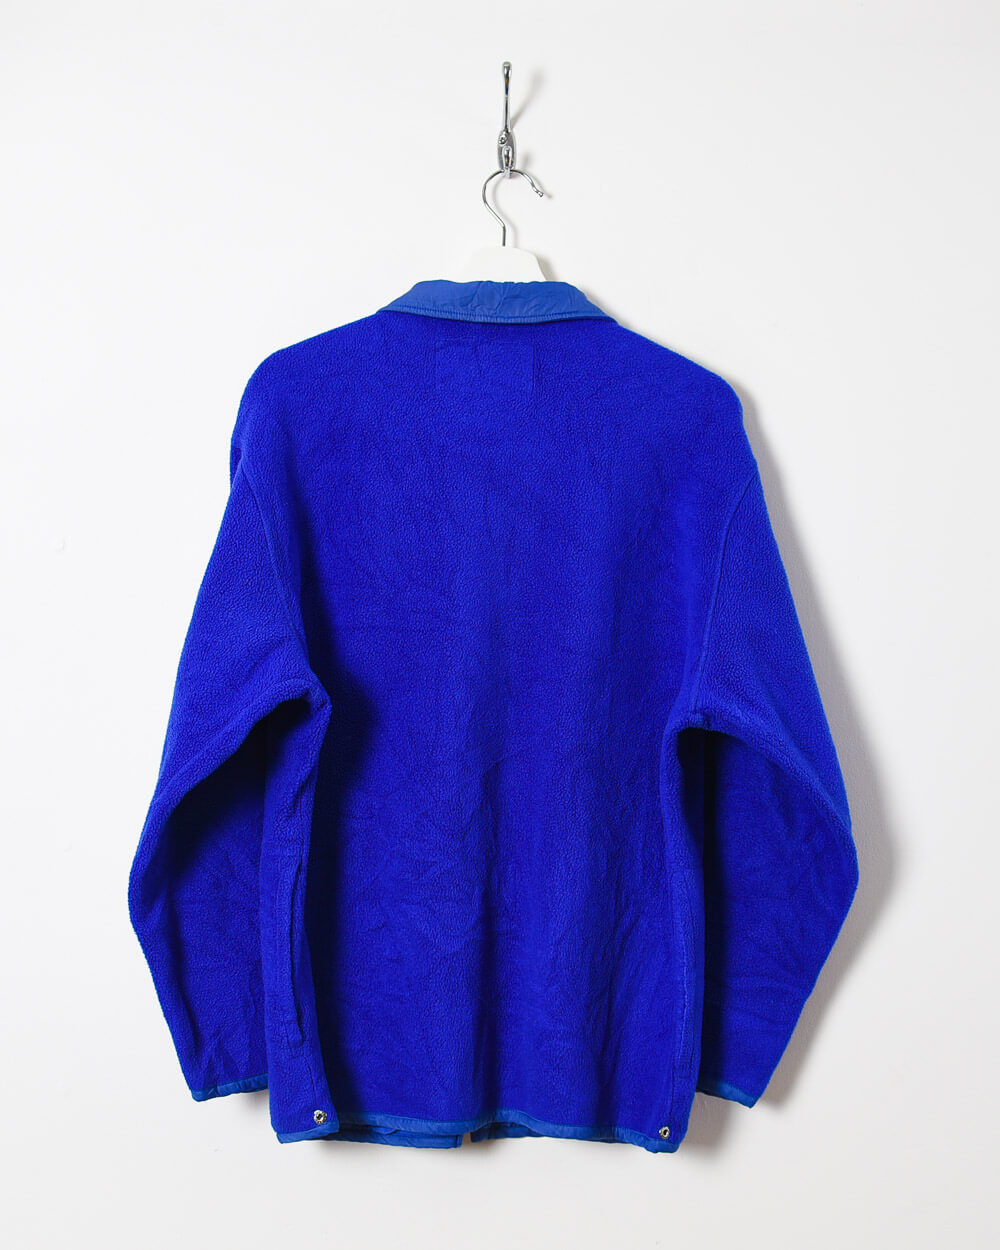 Blue Fila Magic Line Zip-Through Fleece - Large